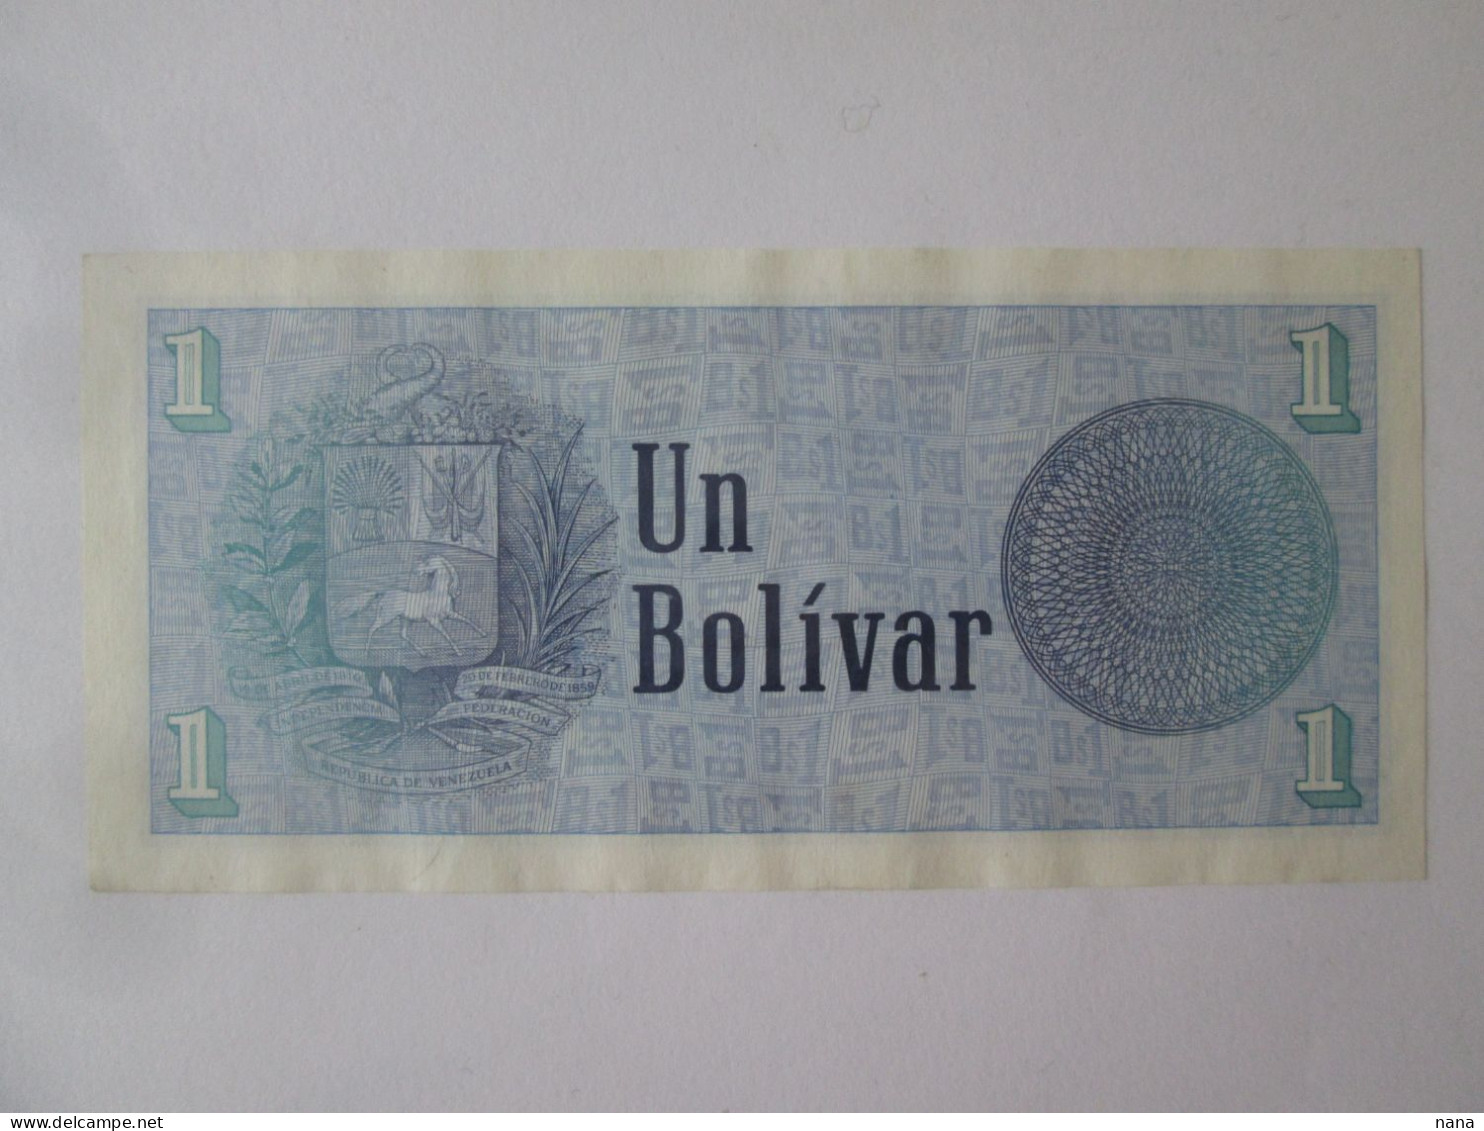 Venezuela 1 Bolivar 1989 Banknote UNC See Pictures - Venezuela